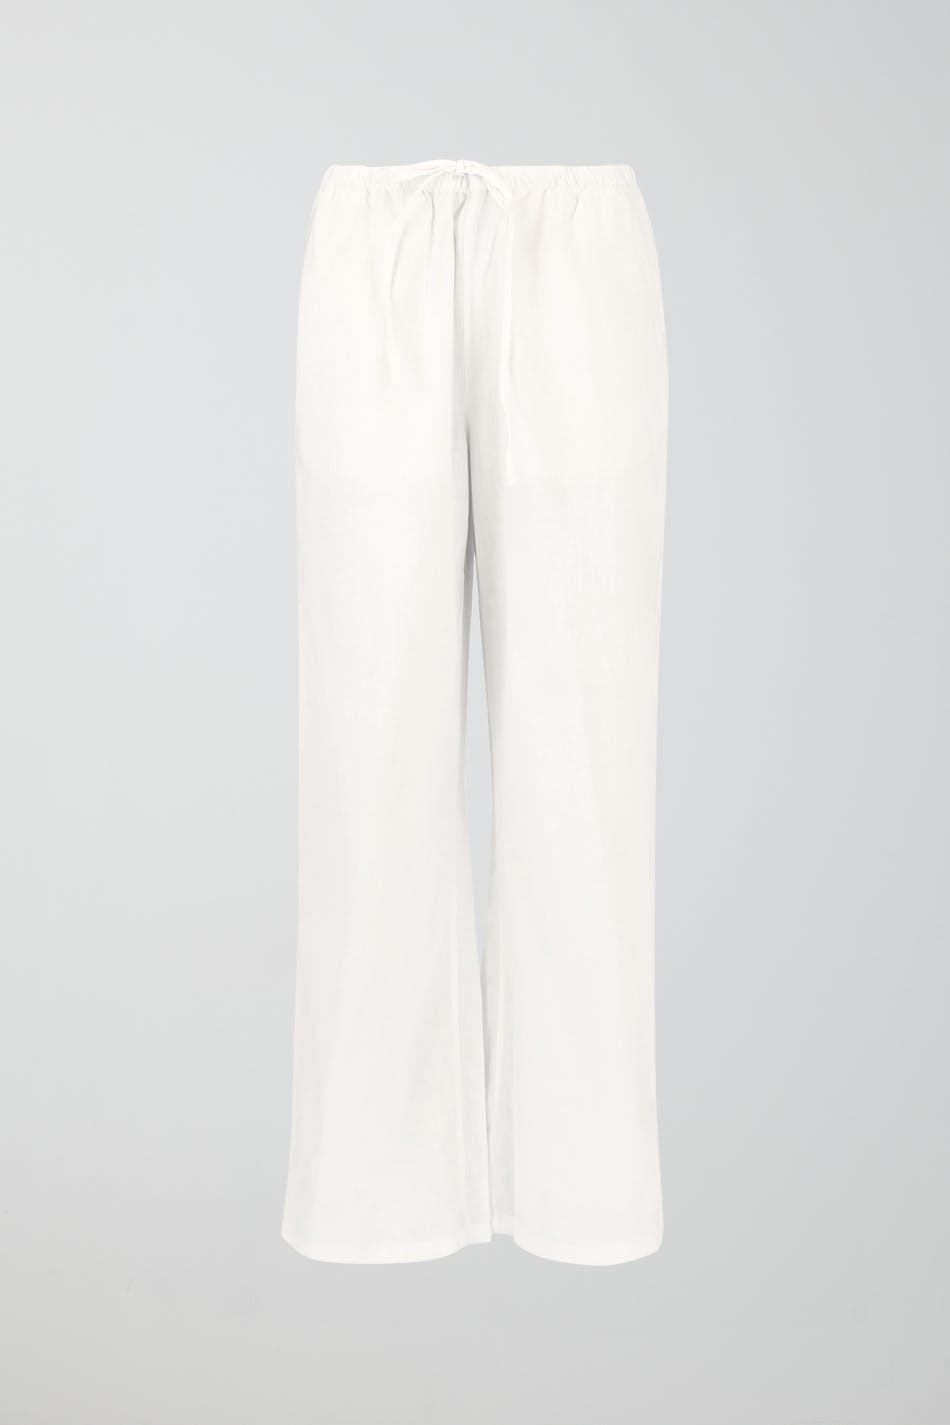 Gina Tricot - Tall linen blend trousers - linnebyxor - White - XS - Female